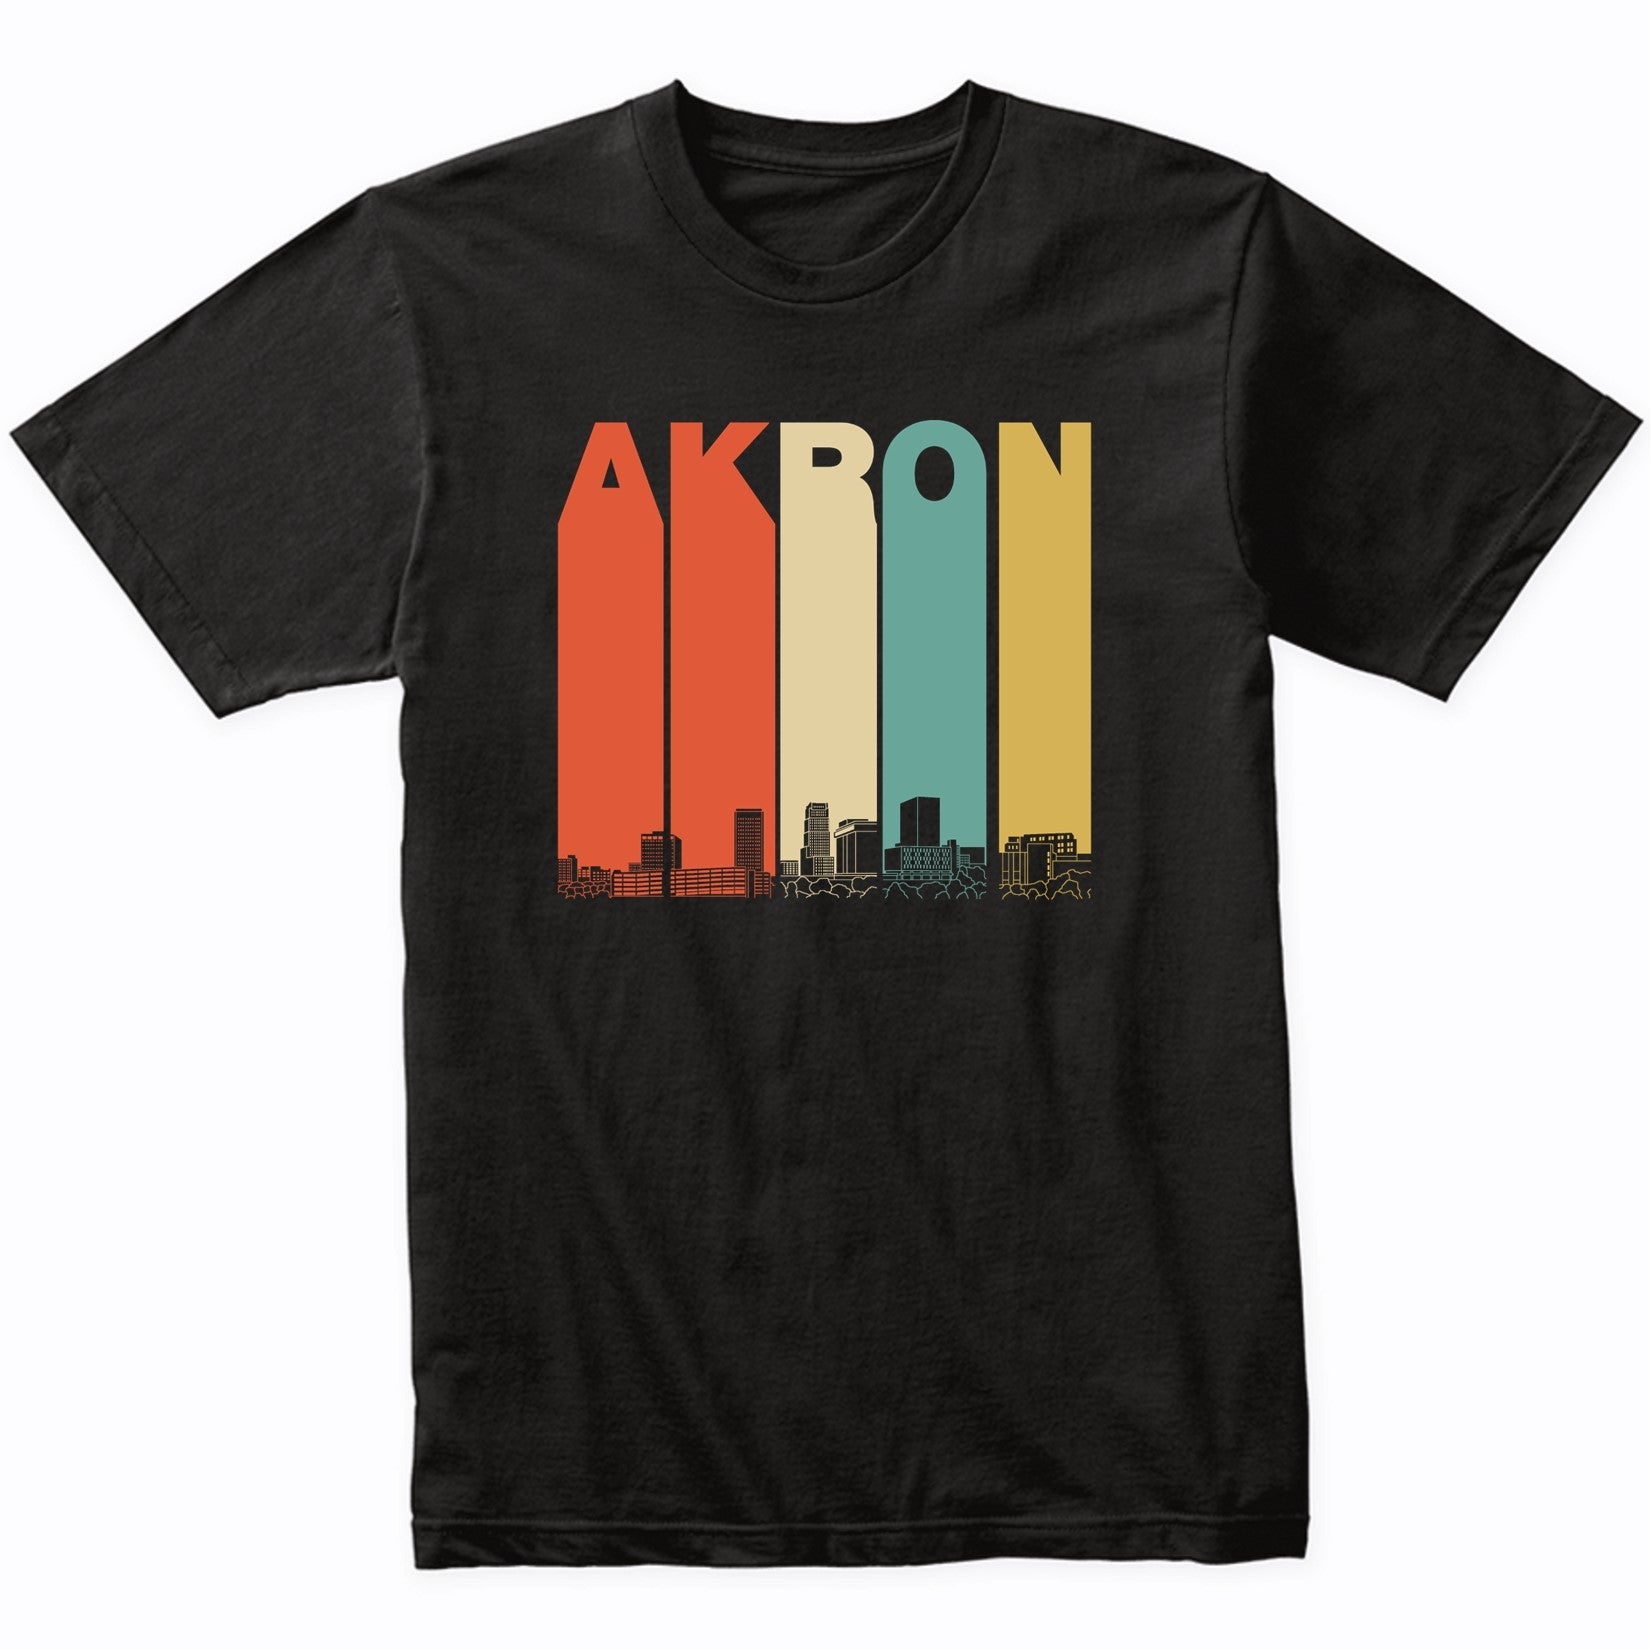 Vintage 1970's Style Akron Ohio Skyline T-Shirt